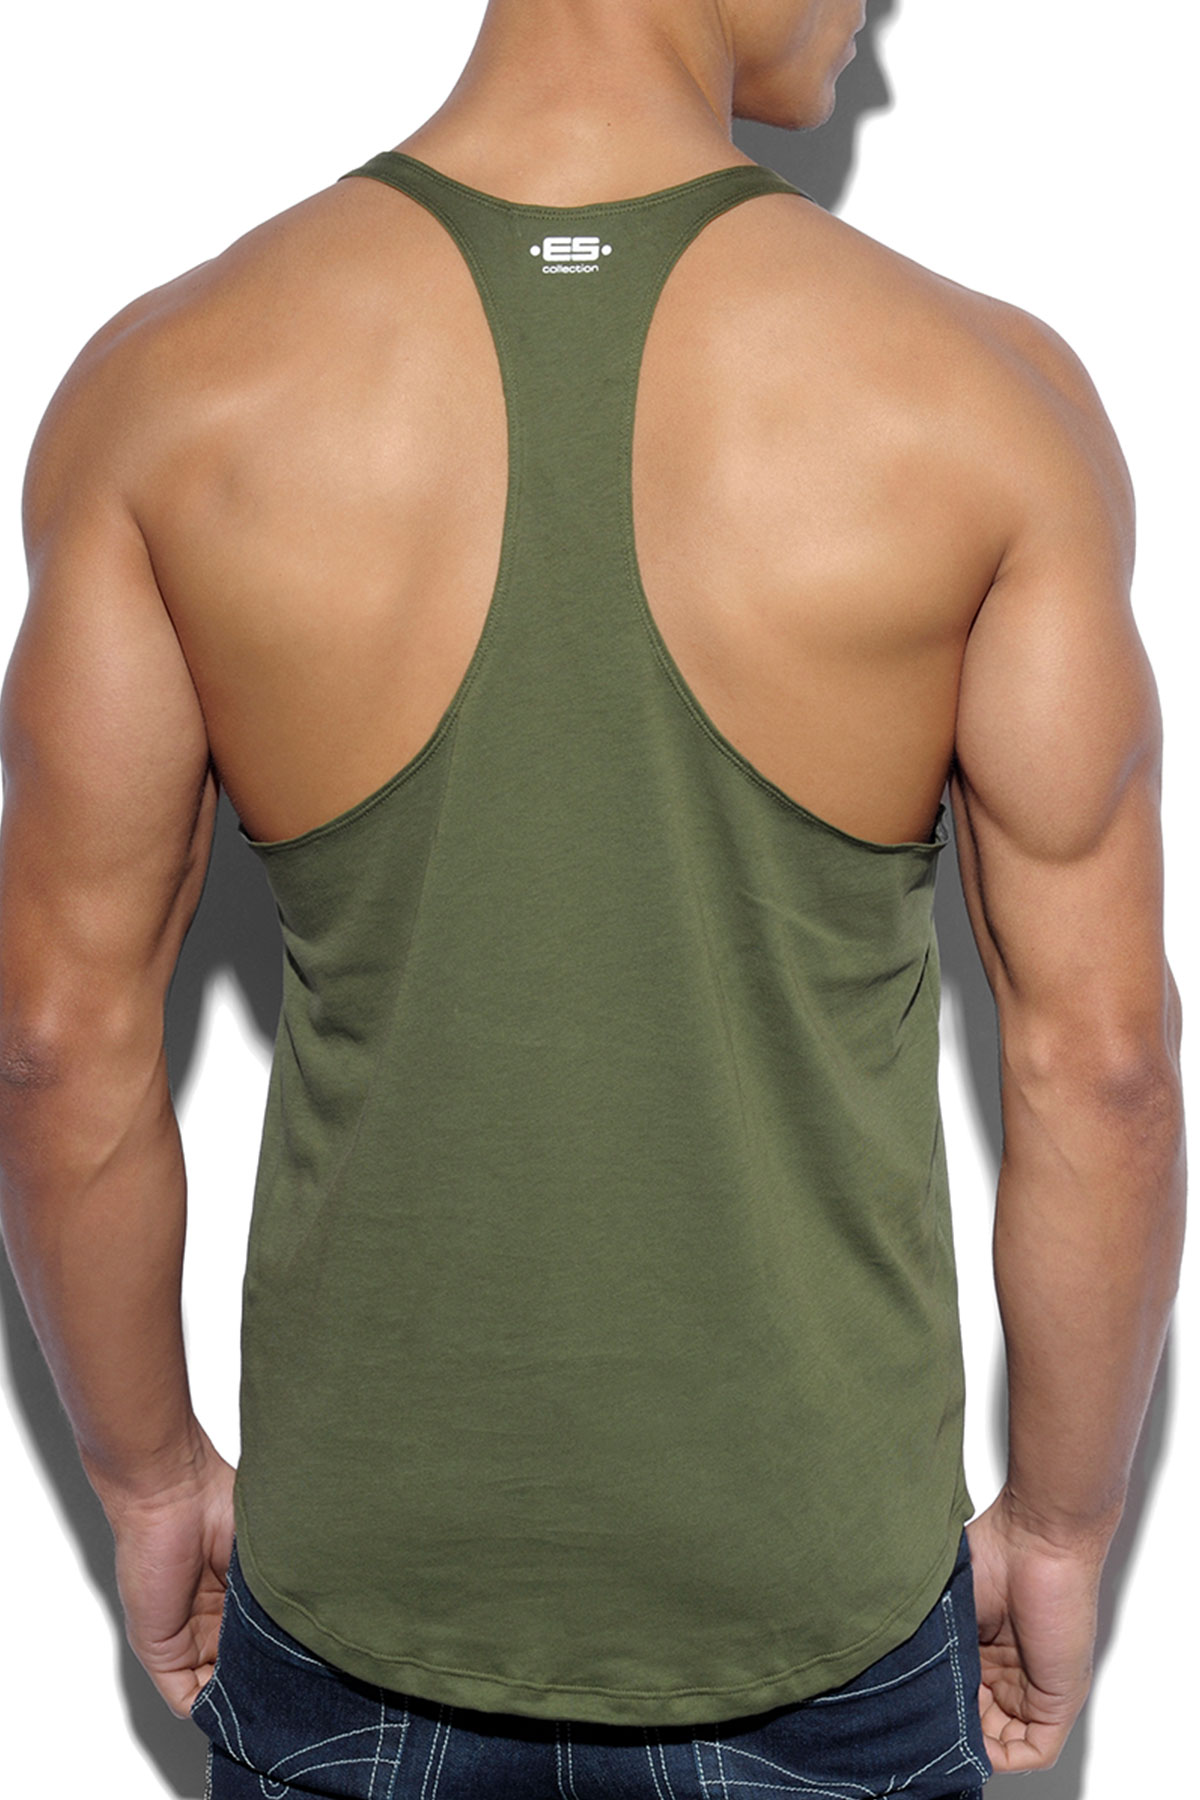 Men's sleeveless t-shirt US Army design muscle tee tank top tshirt 